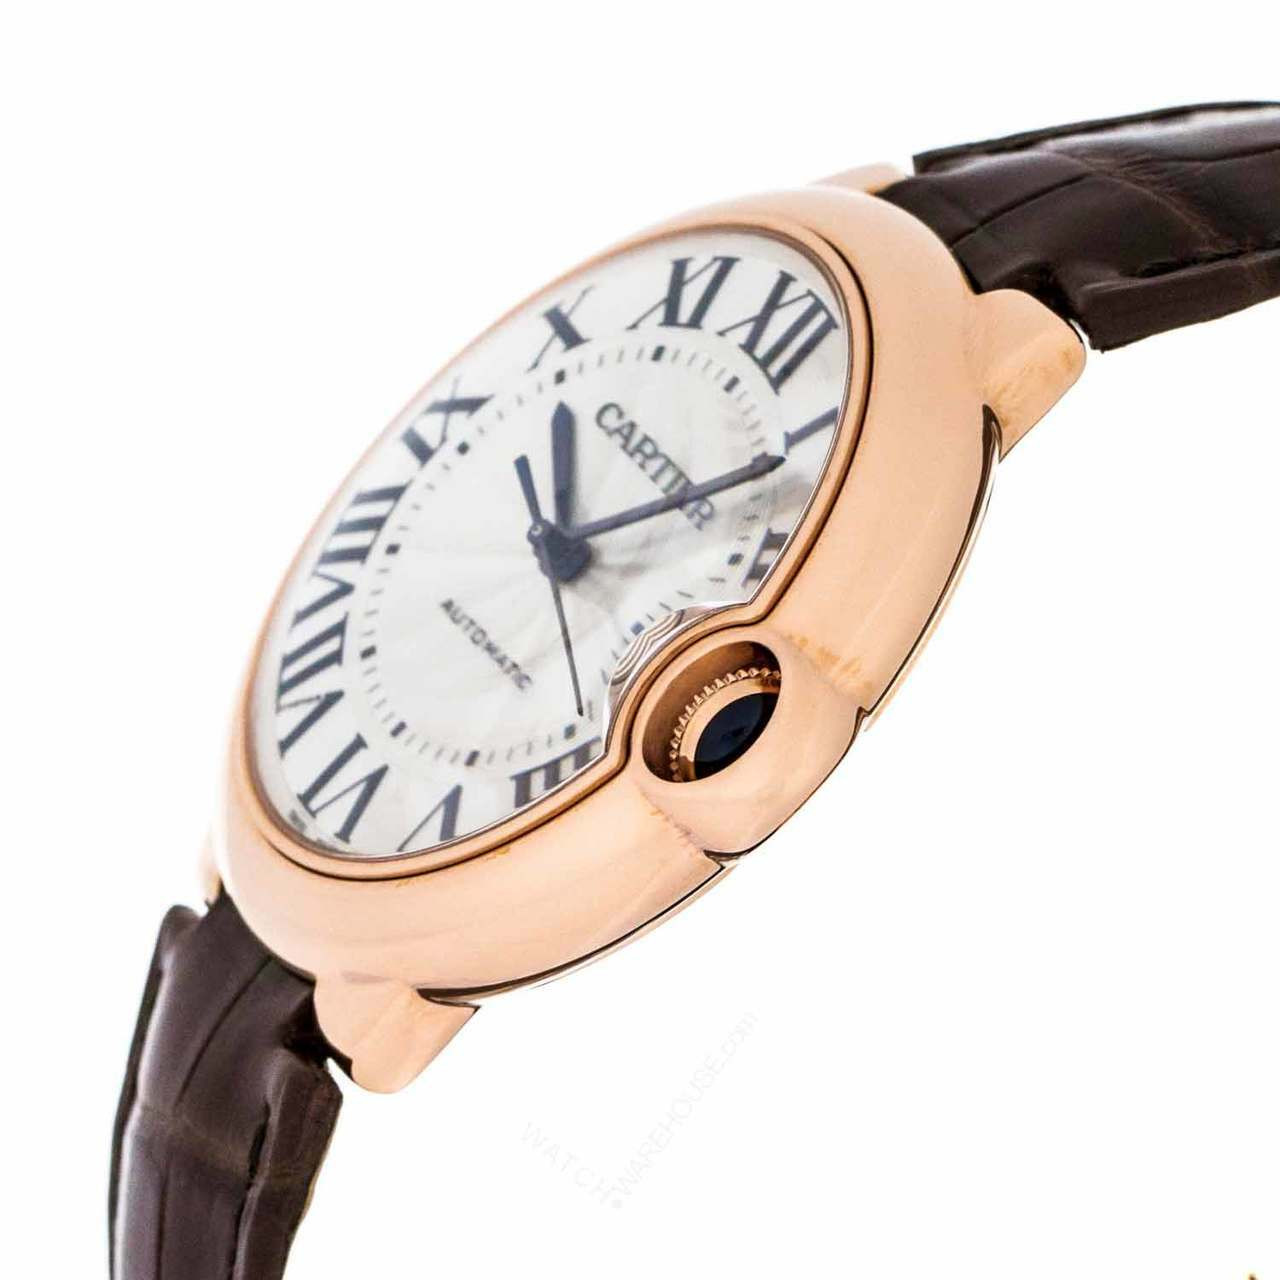 Cartier Men's W6900651 'Ballon Bleu' Brown Leather Watch